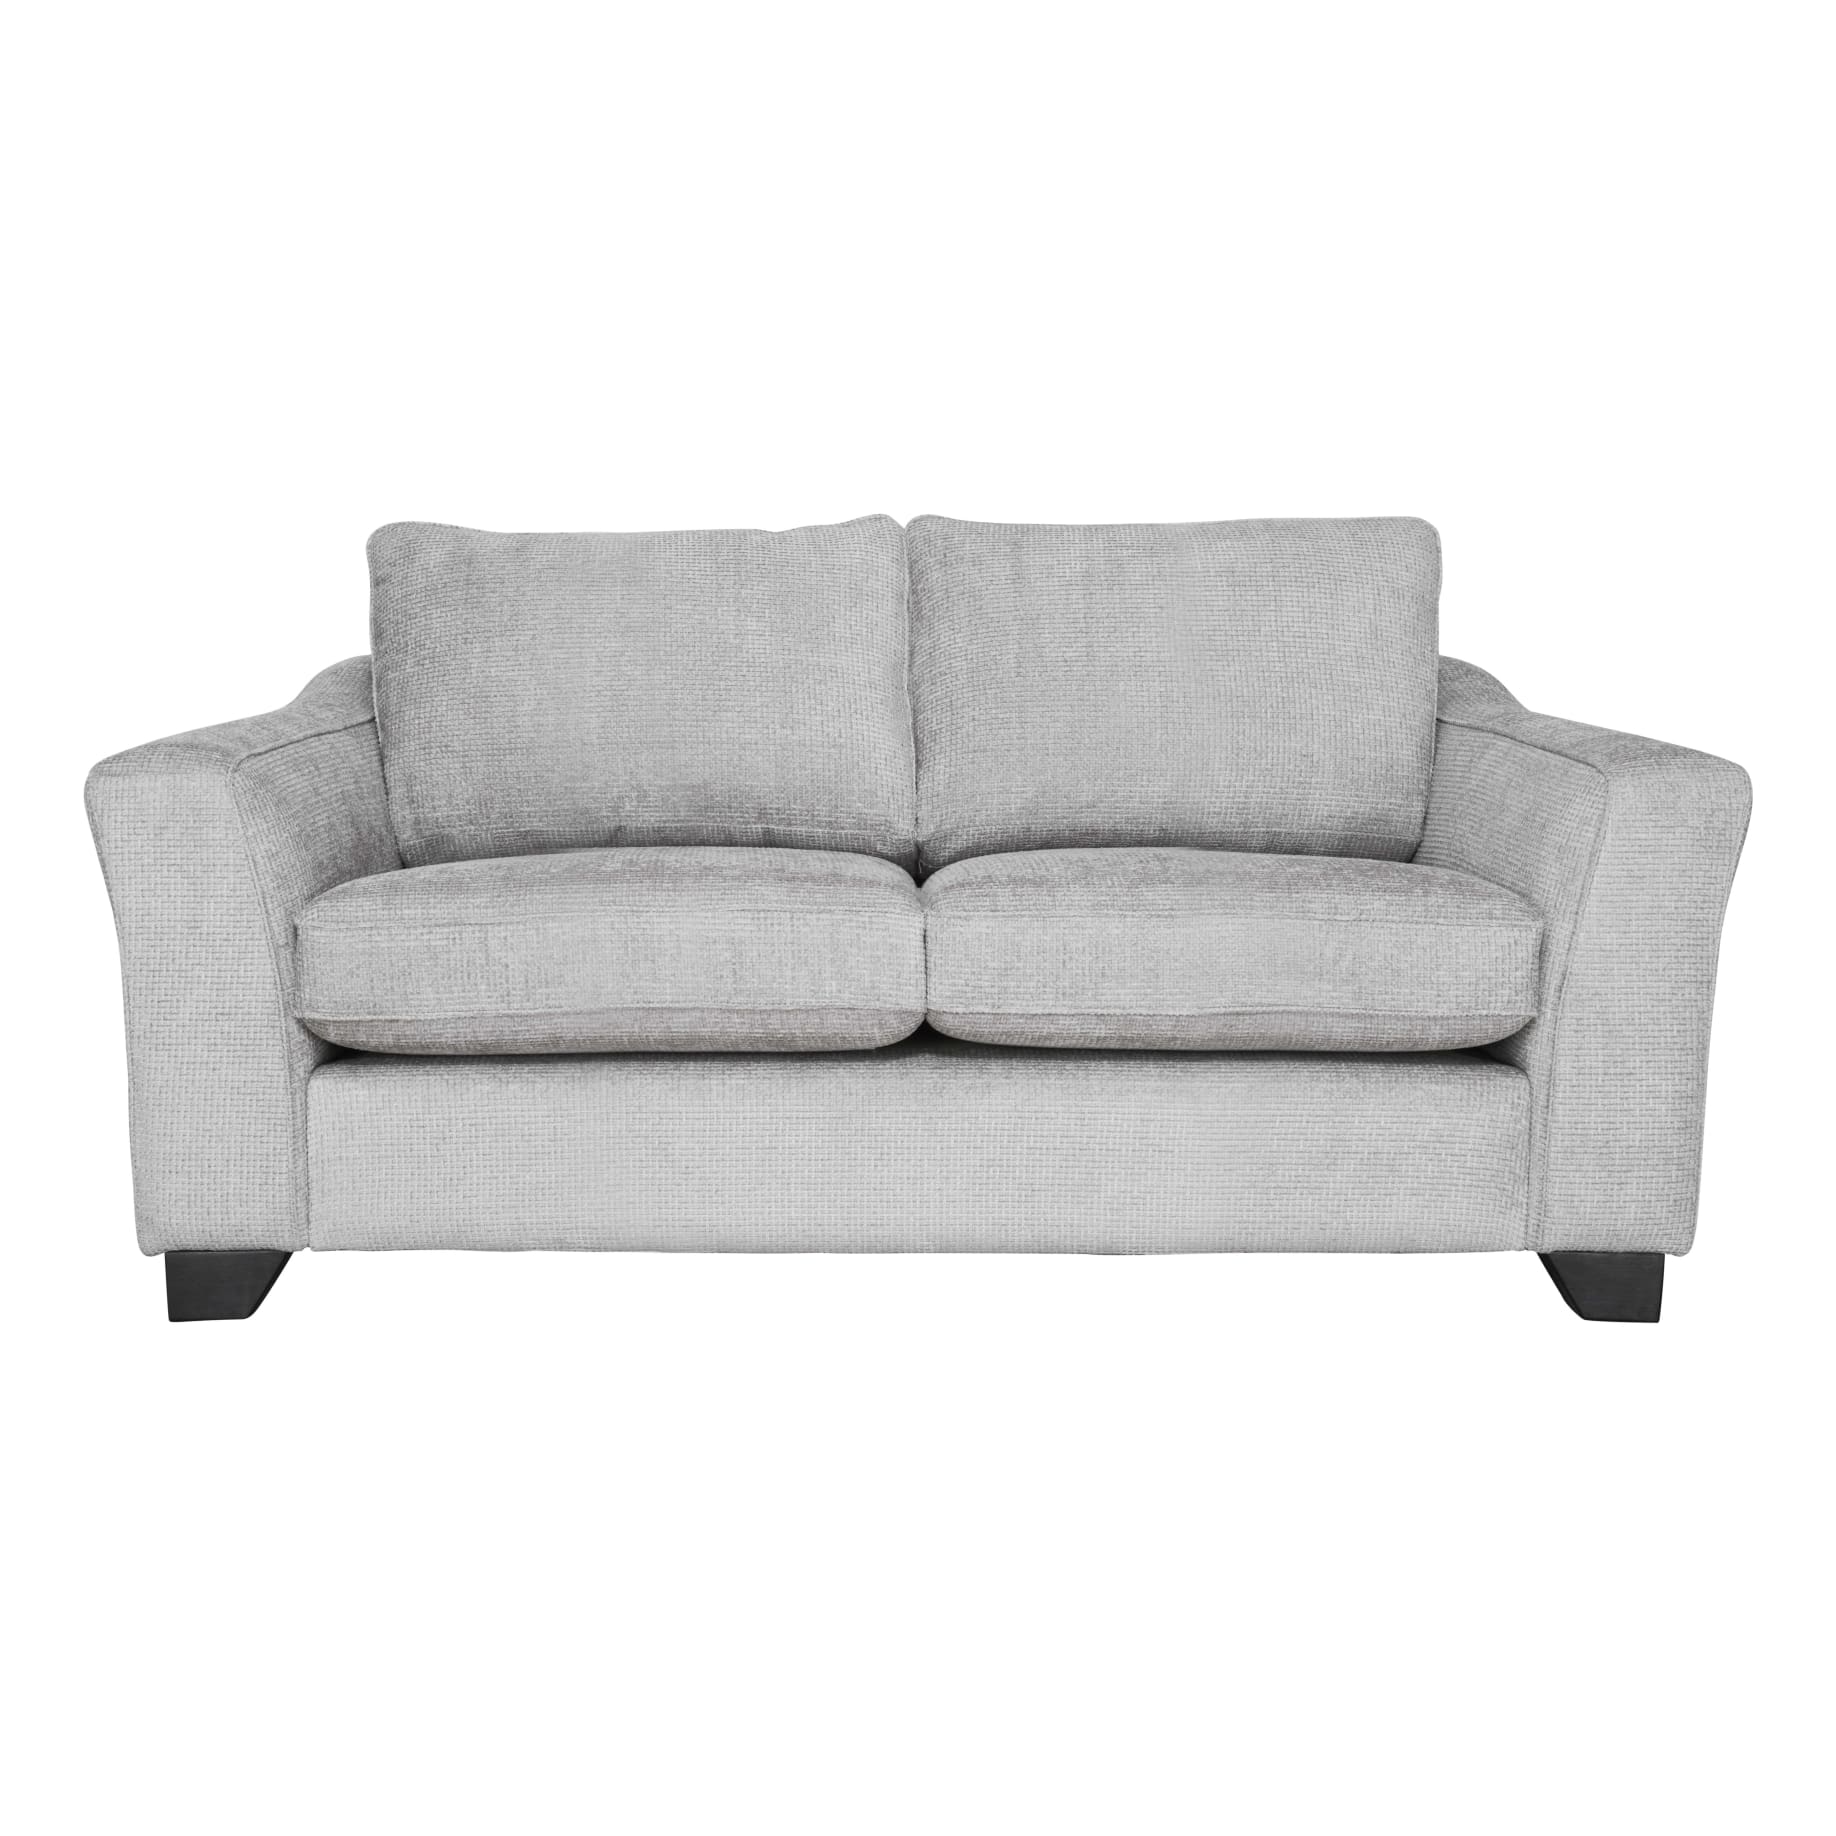 Sloane 2 Seater Sofa in Selected Fabrics